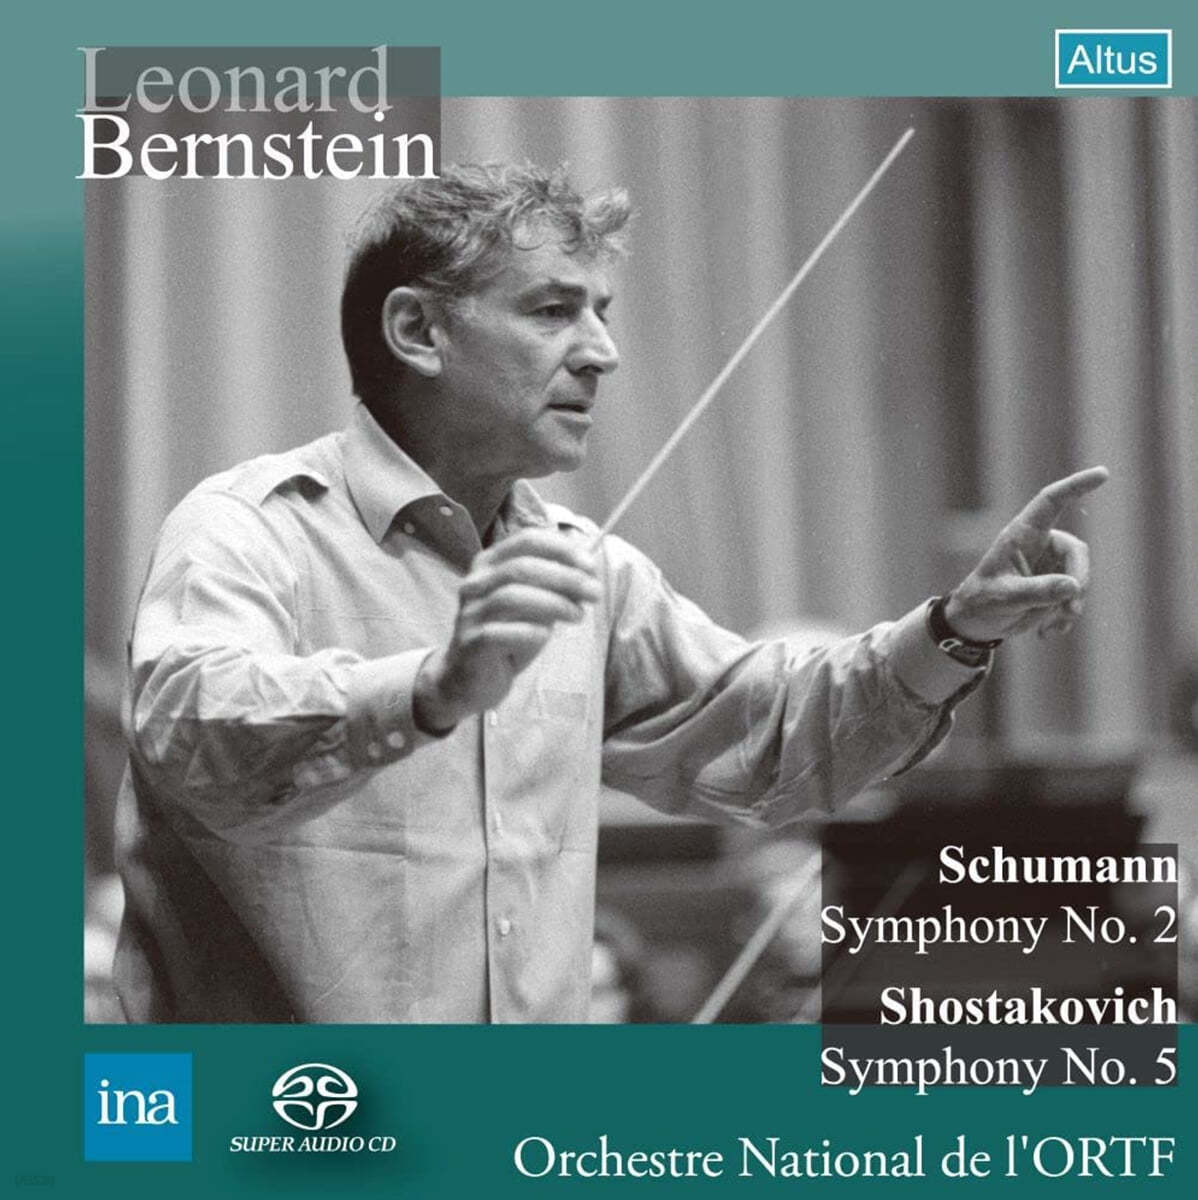 Leonard Bernstein 베를리오즈: 로마의 사육제 / 슈만: 교향곡 2번 / 쇼스타코비치: 교향곡 5번 - 레너드 번스타인 (Schumann: Symphony No. 2 / Shostakovich: Symphony No. 5)